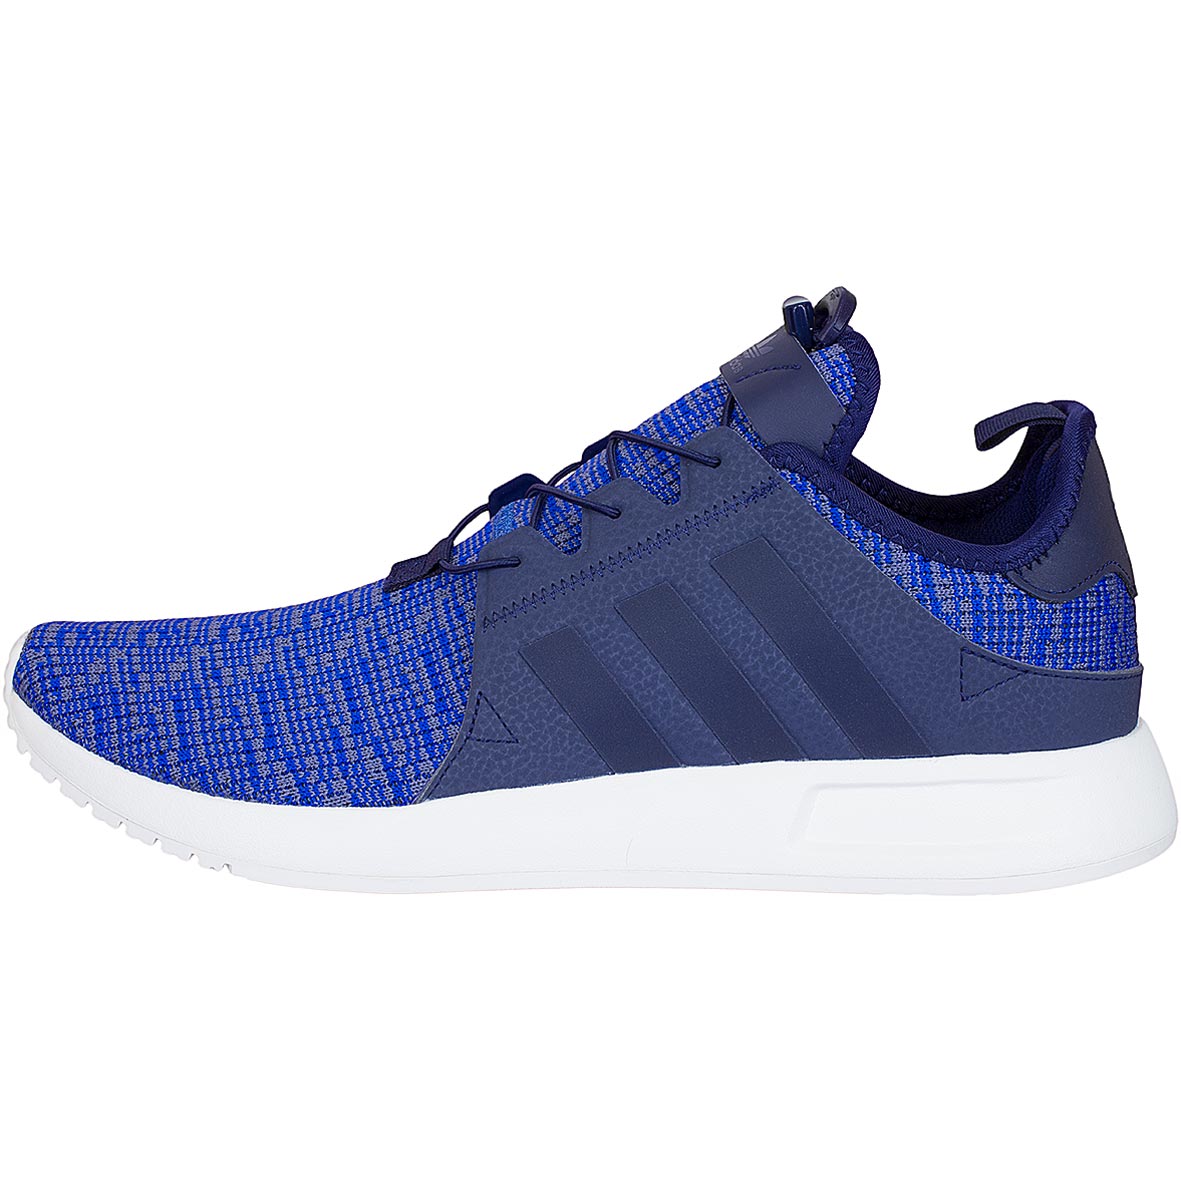 ☆ Adidas Originals Sneaker X PLR dunkelblau - hier bestellen!